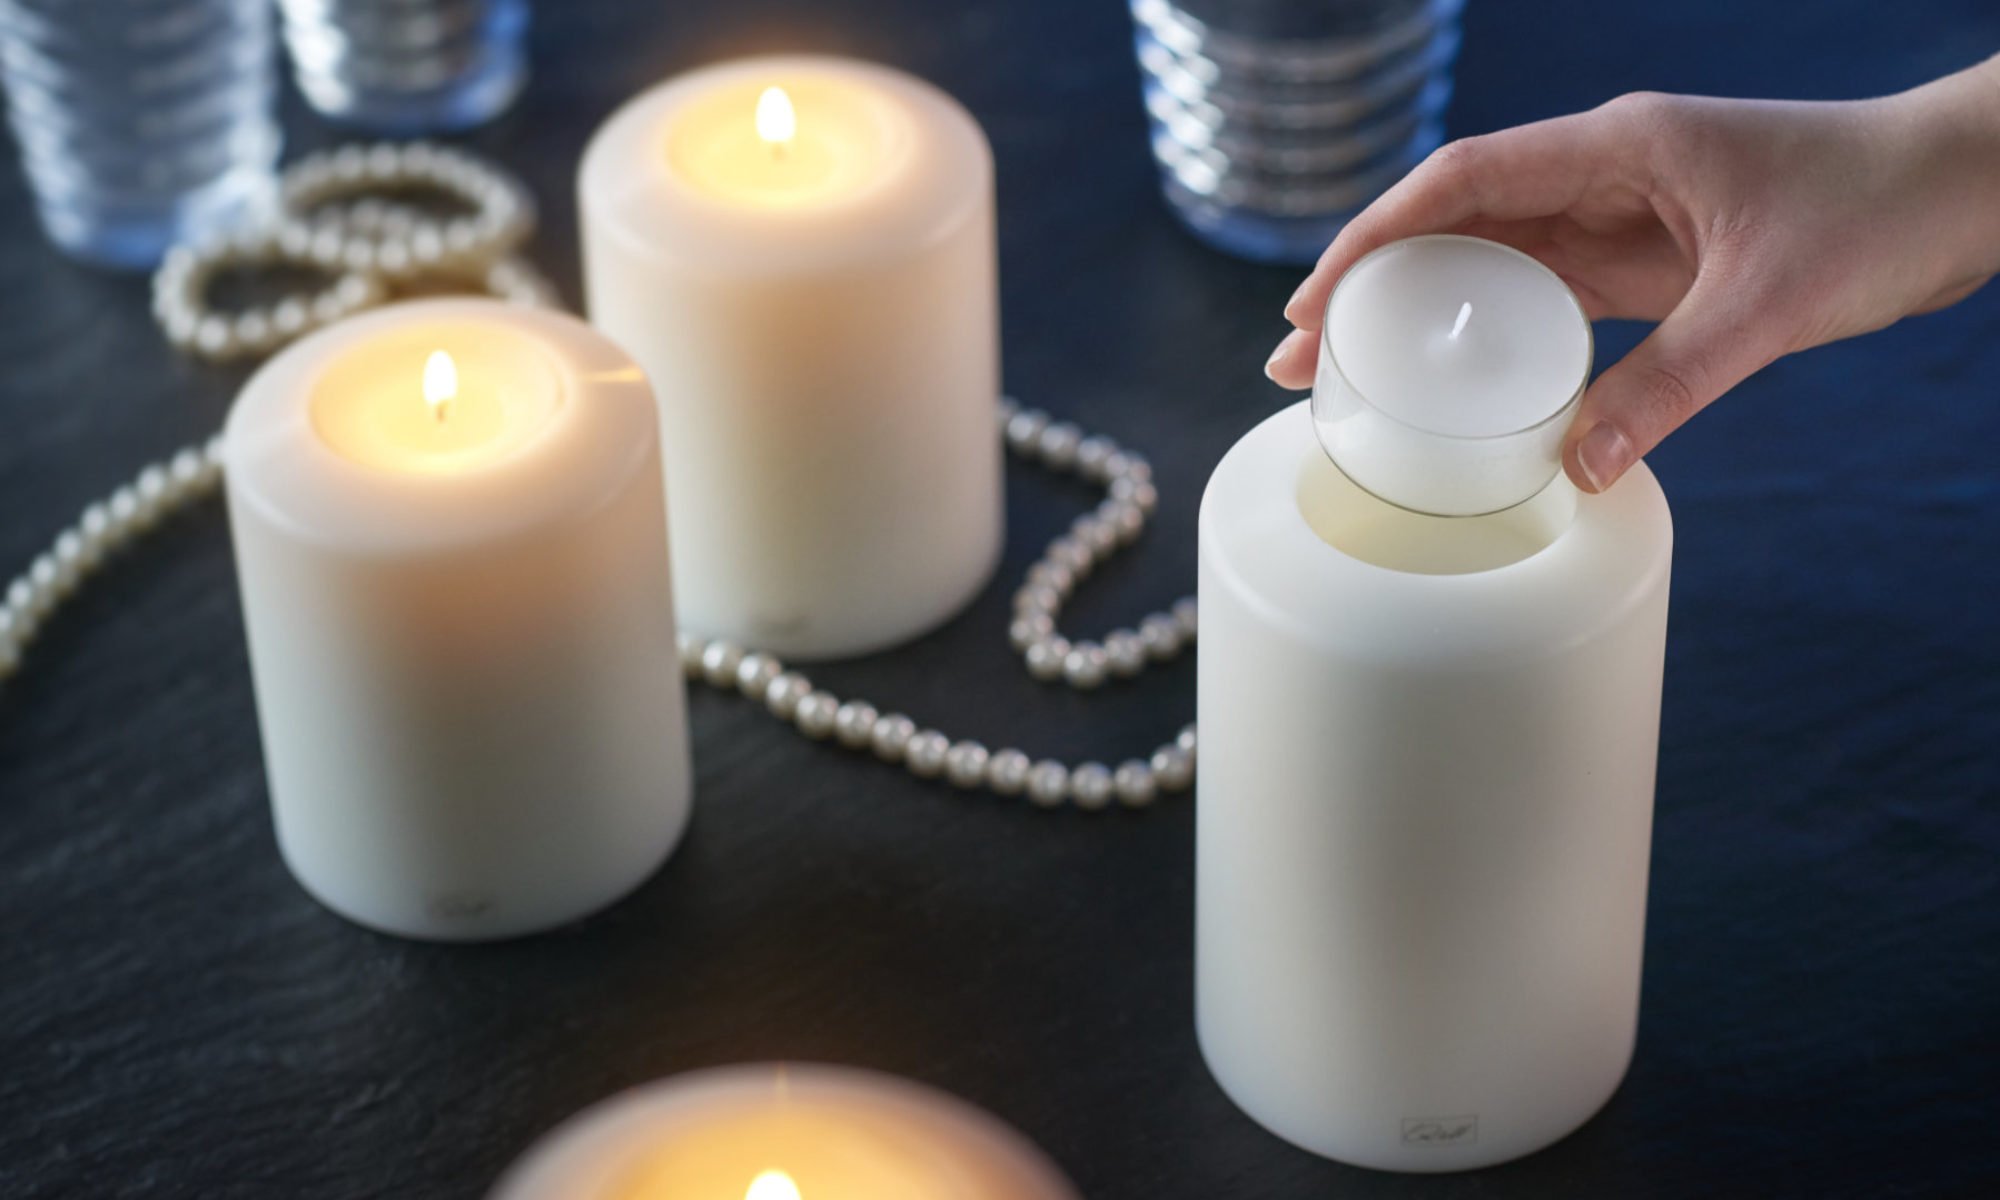 Original Qult Design Candle Shaped Tea Light Holders